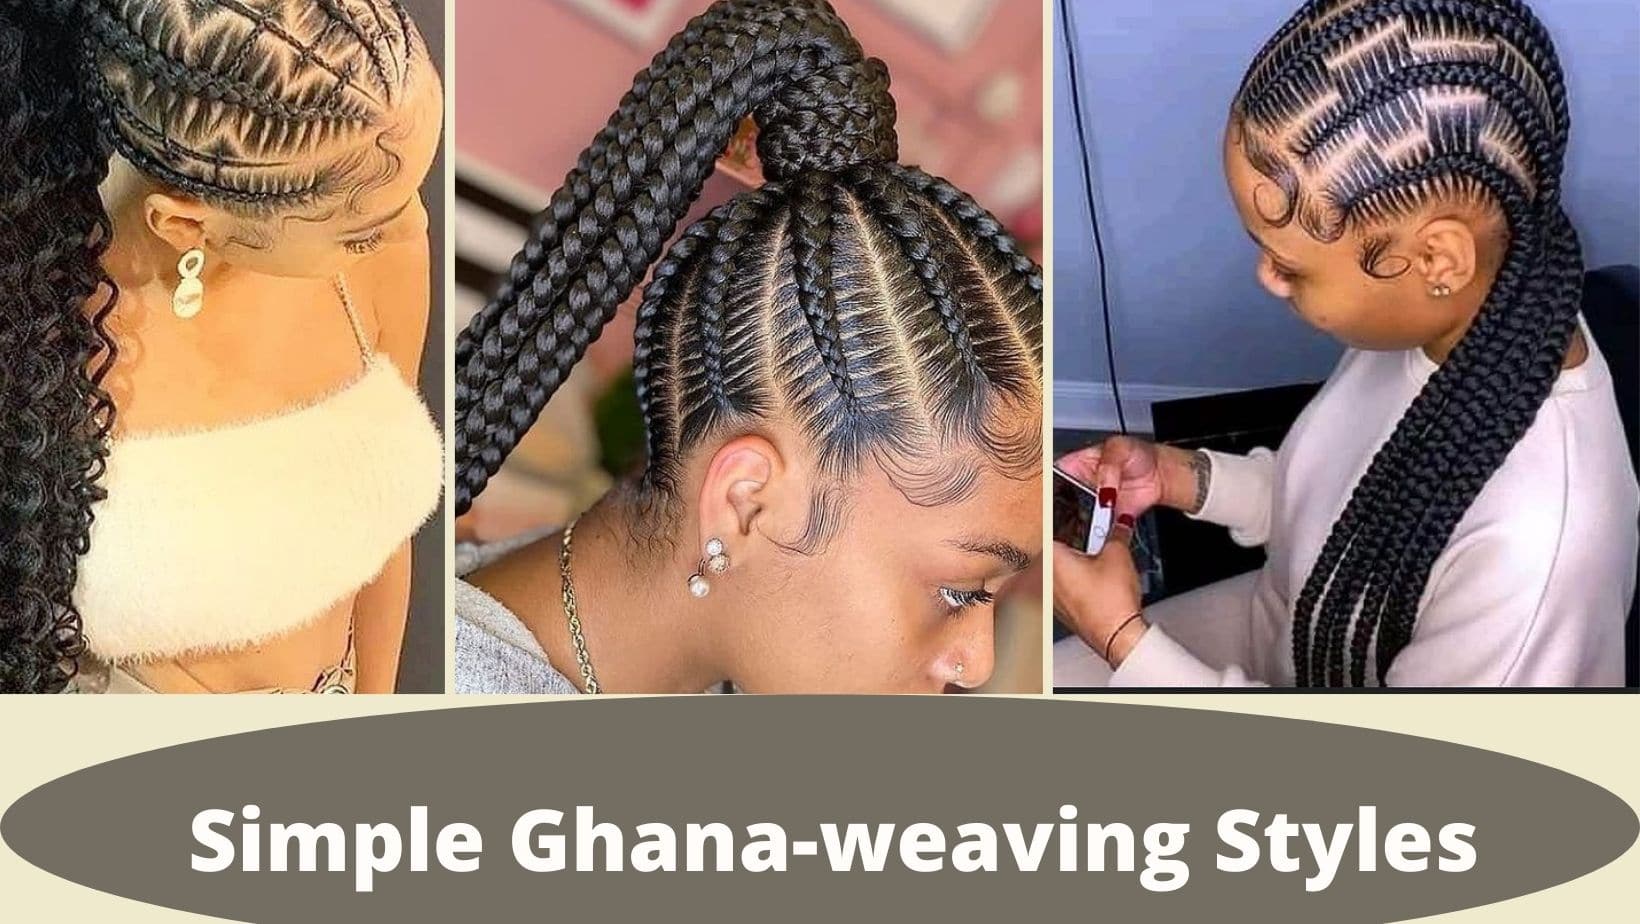 Ghana-weaving Style